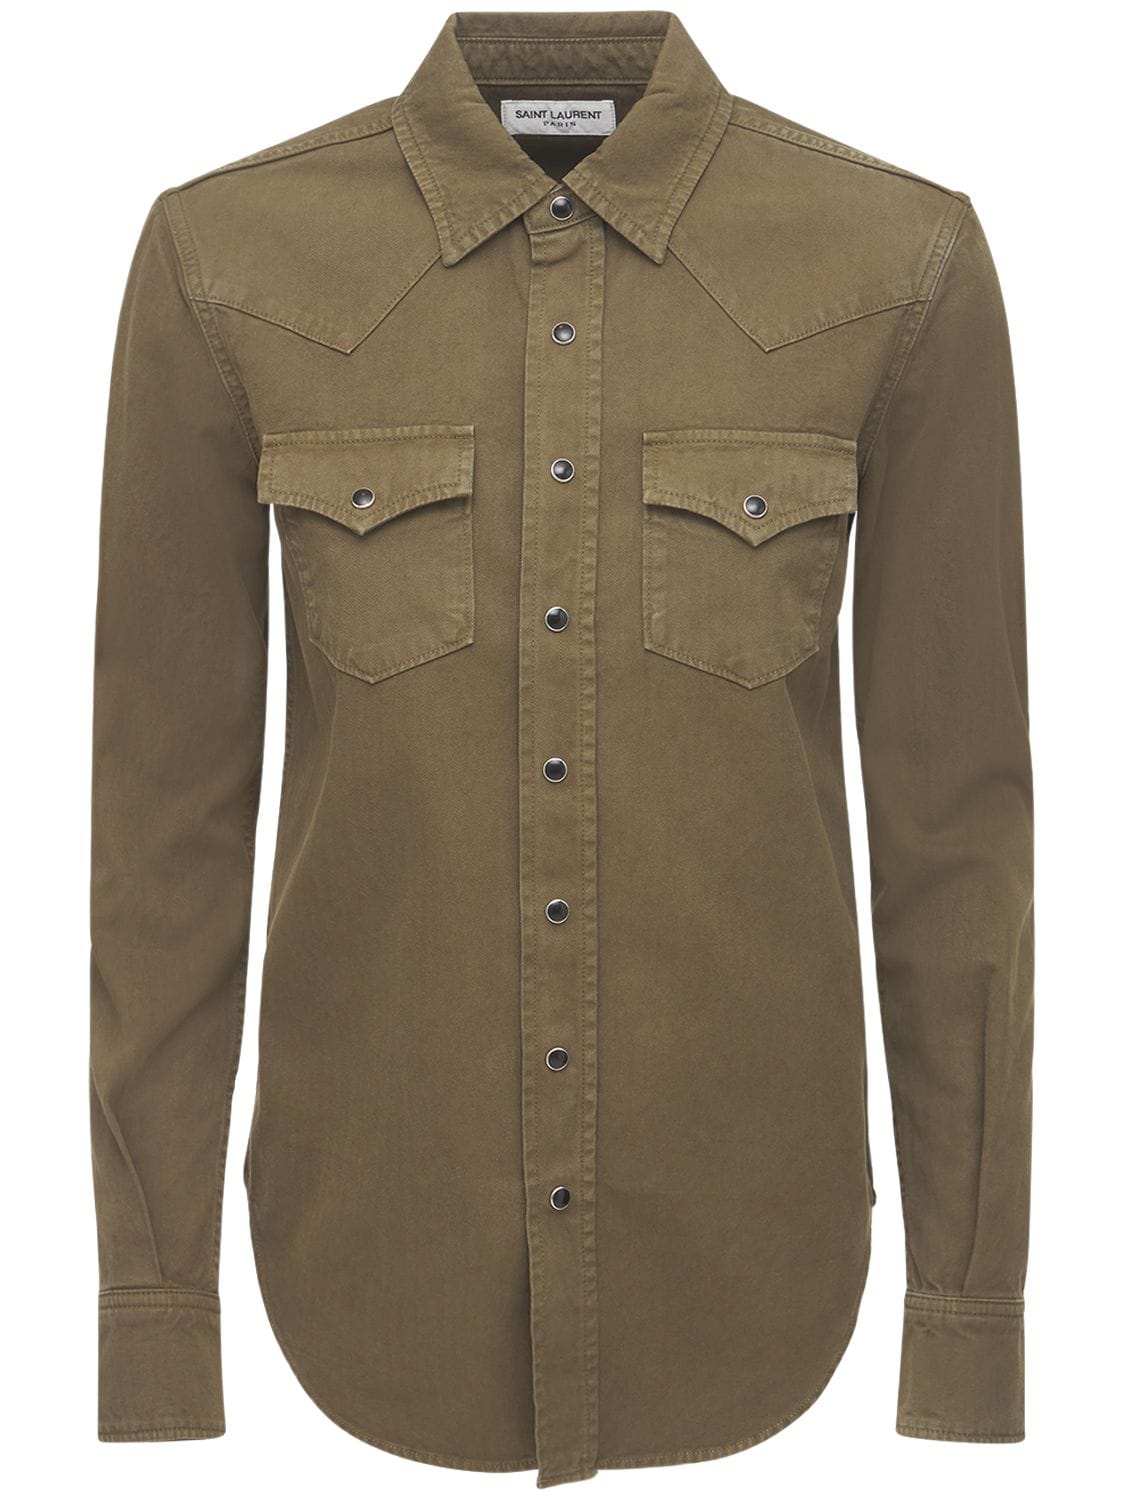 SAINT LAURENT 西部风格棉质牛仔衬衫,73IA8C022-MZI1NG2